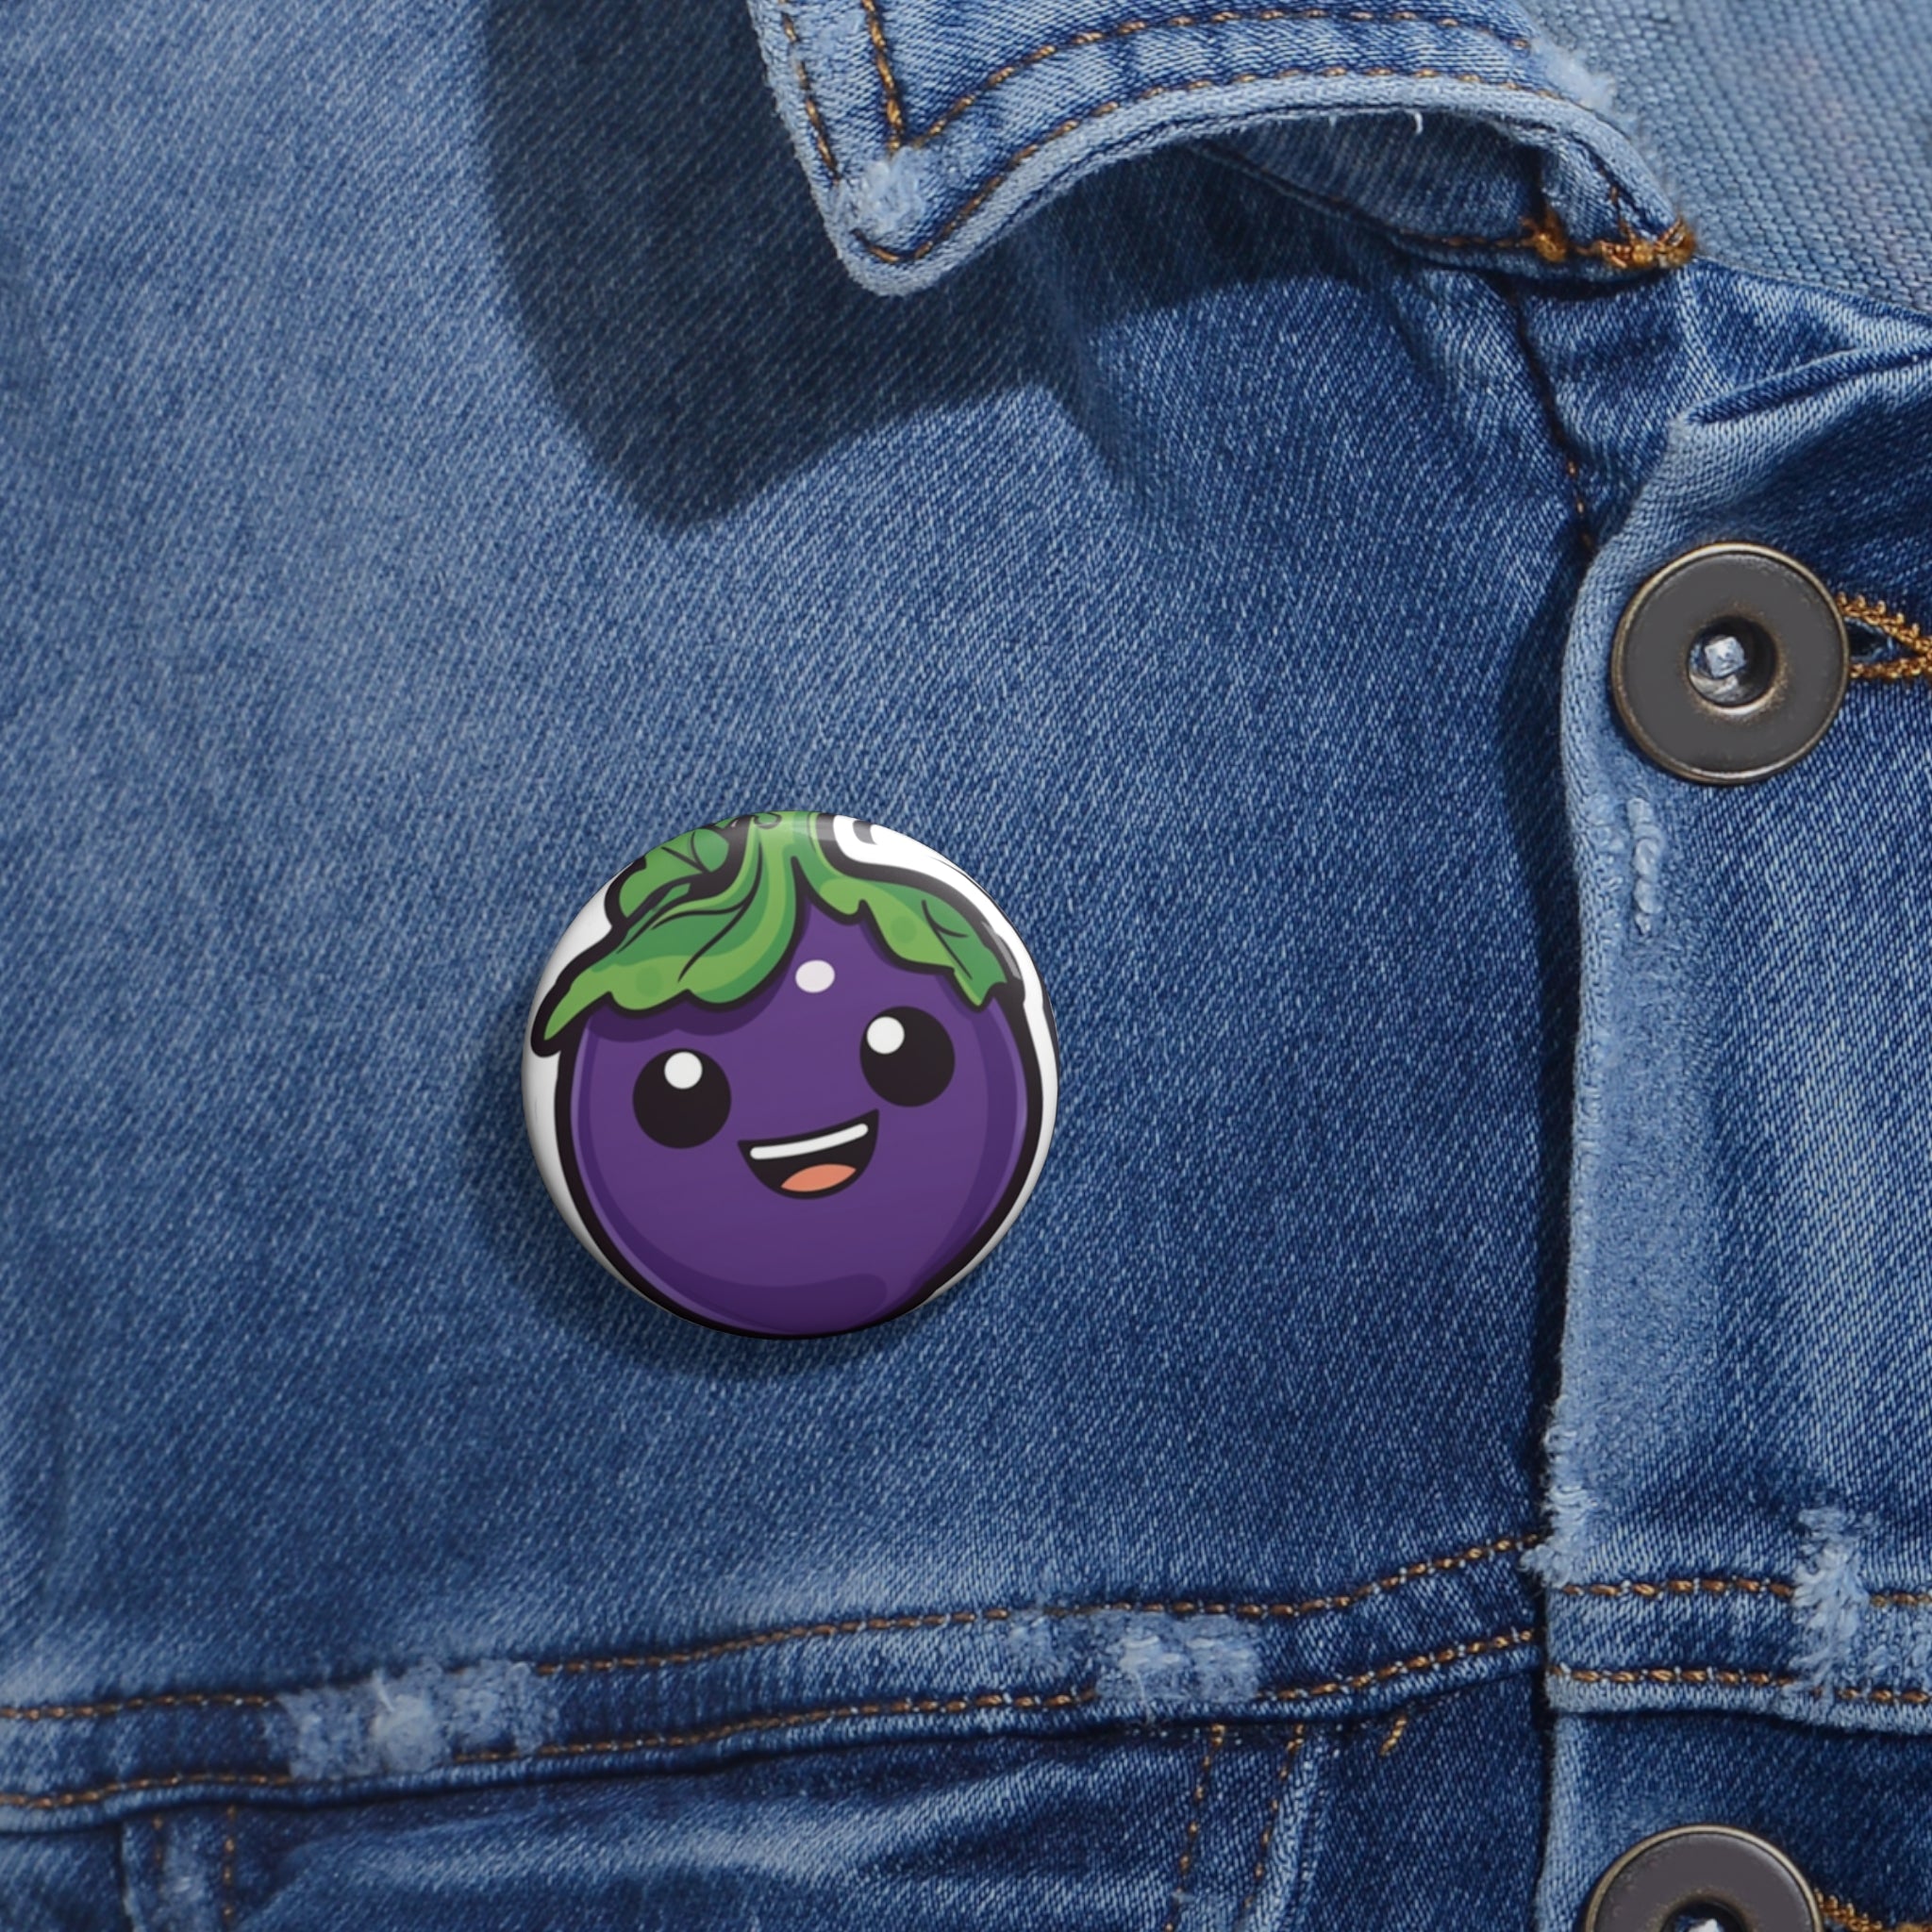 Custom Pin Buttons - Eggplant